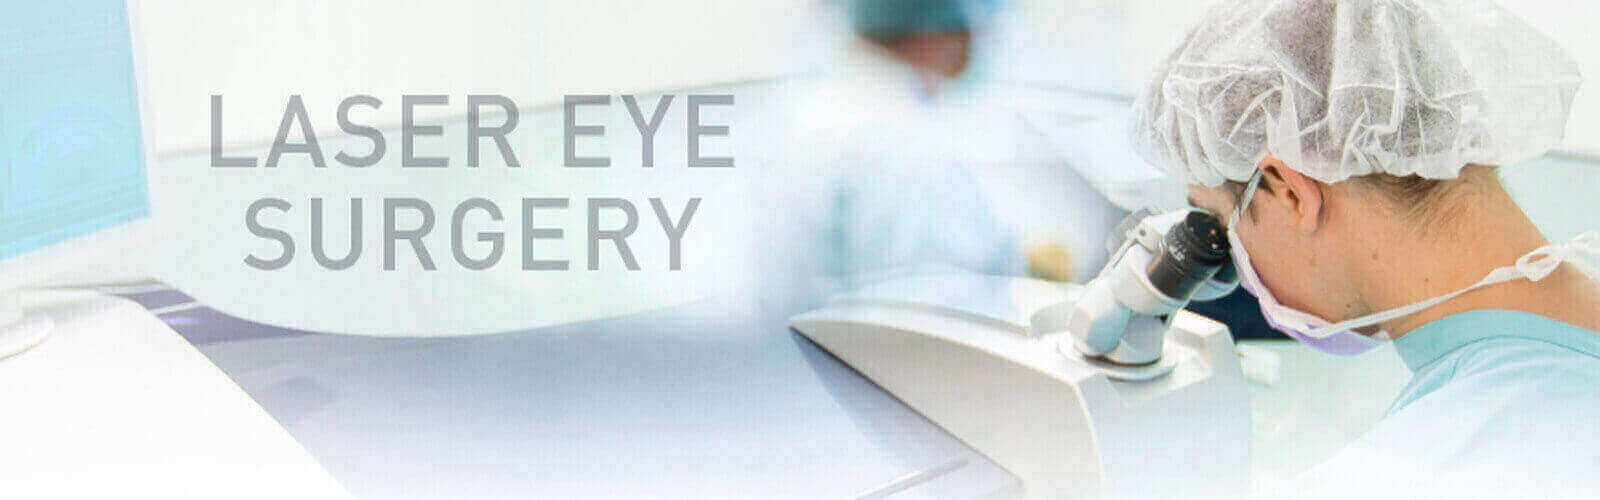 Laser Eye Surgery in Malaysia